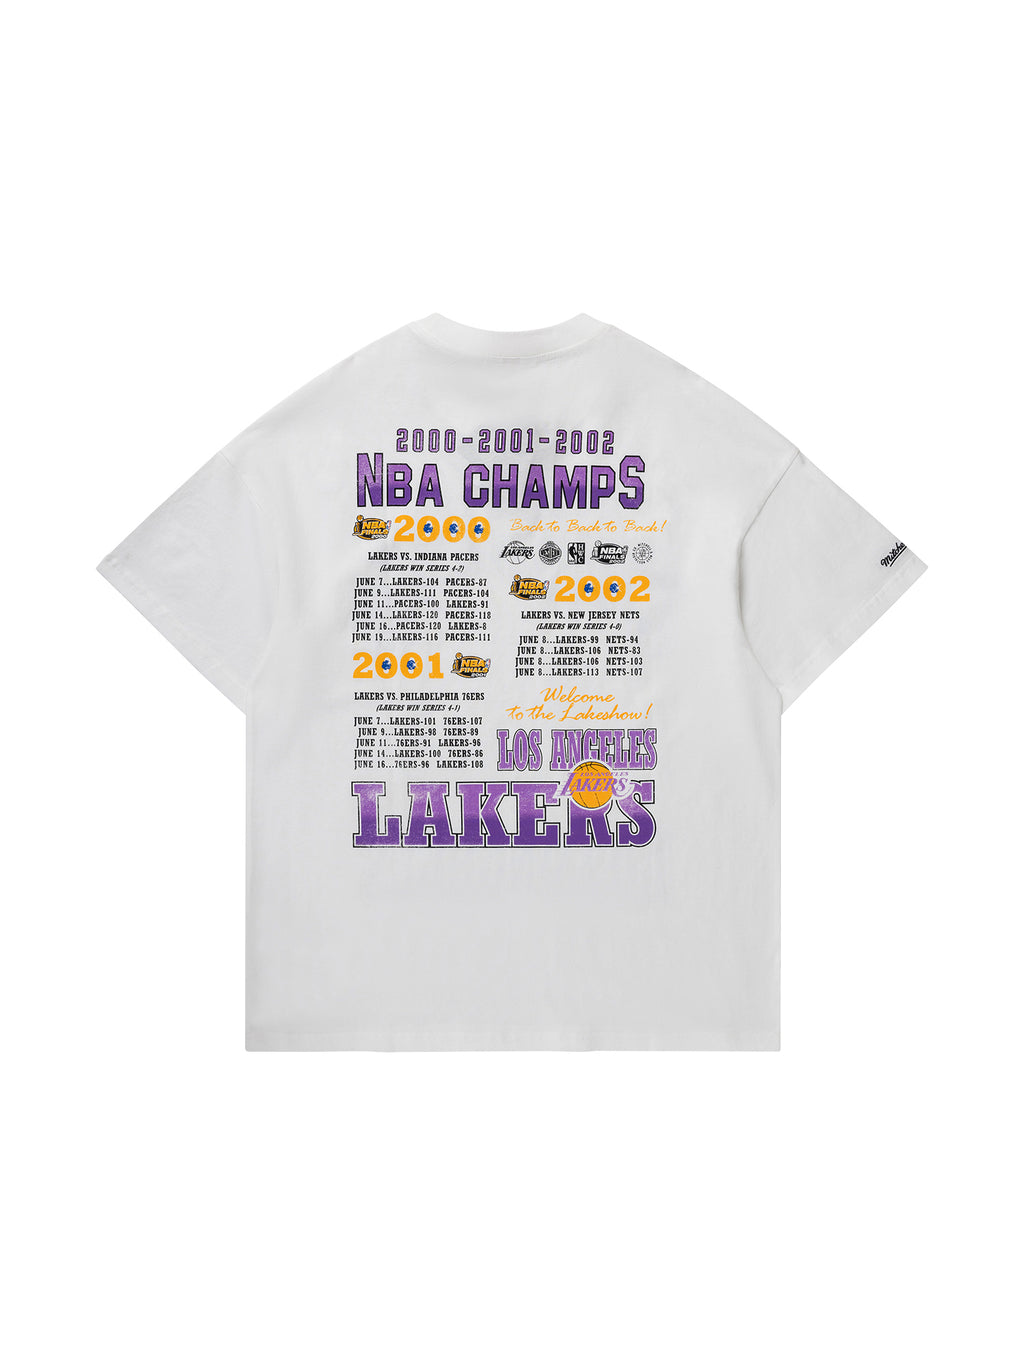 M&N Champions History Tee - Lakers